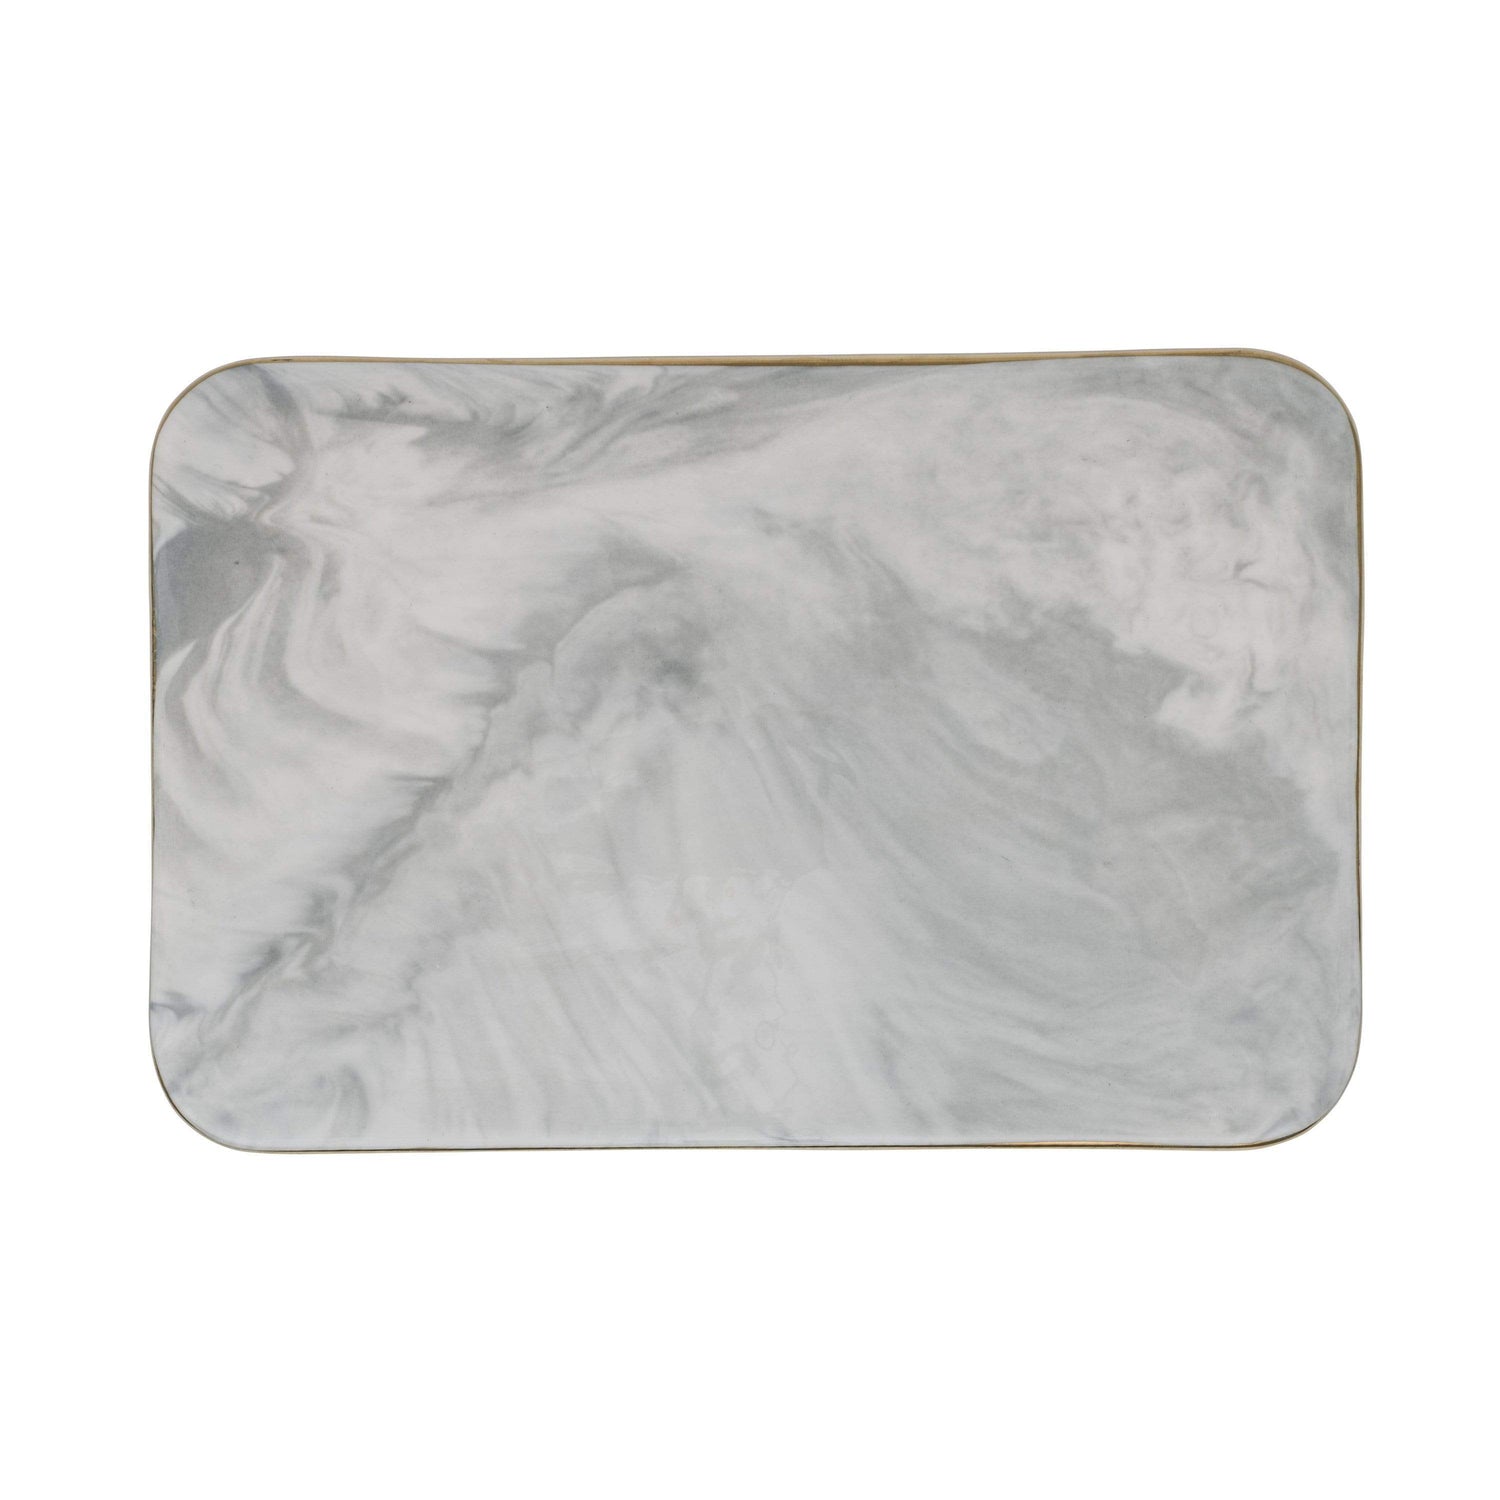 Marble Board - Nordic Side - bis-hidden, dining, kitchen